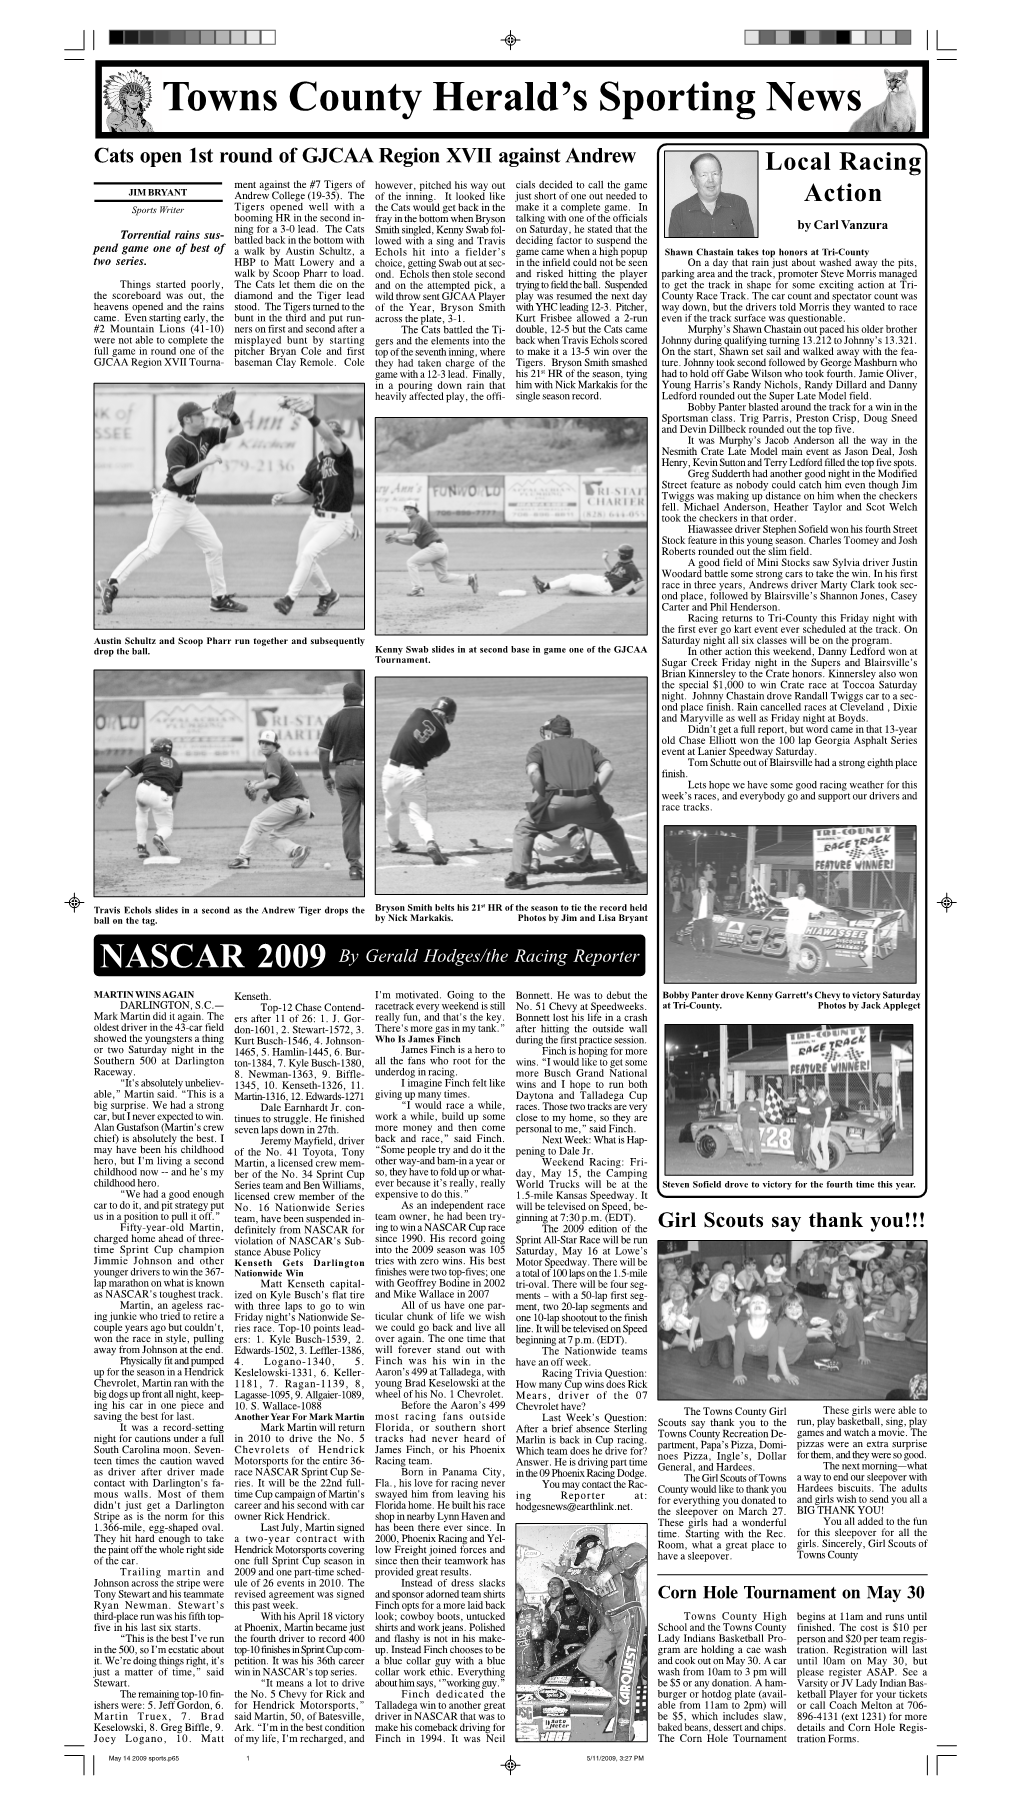 May 14 2009 Sports.P65 1 5/11/2009, 3:27 PM